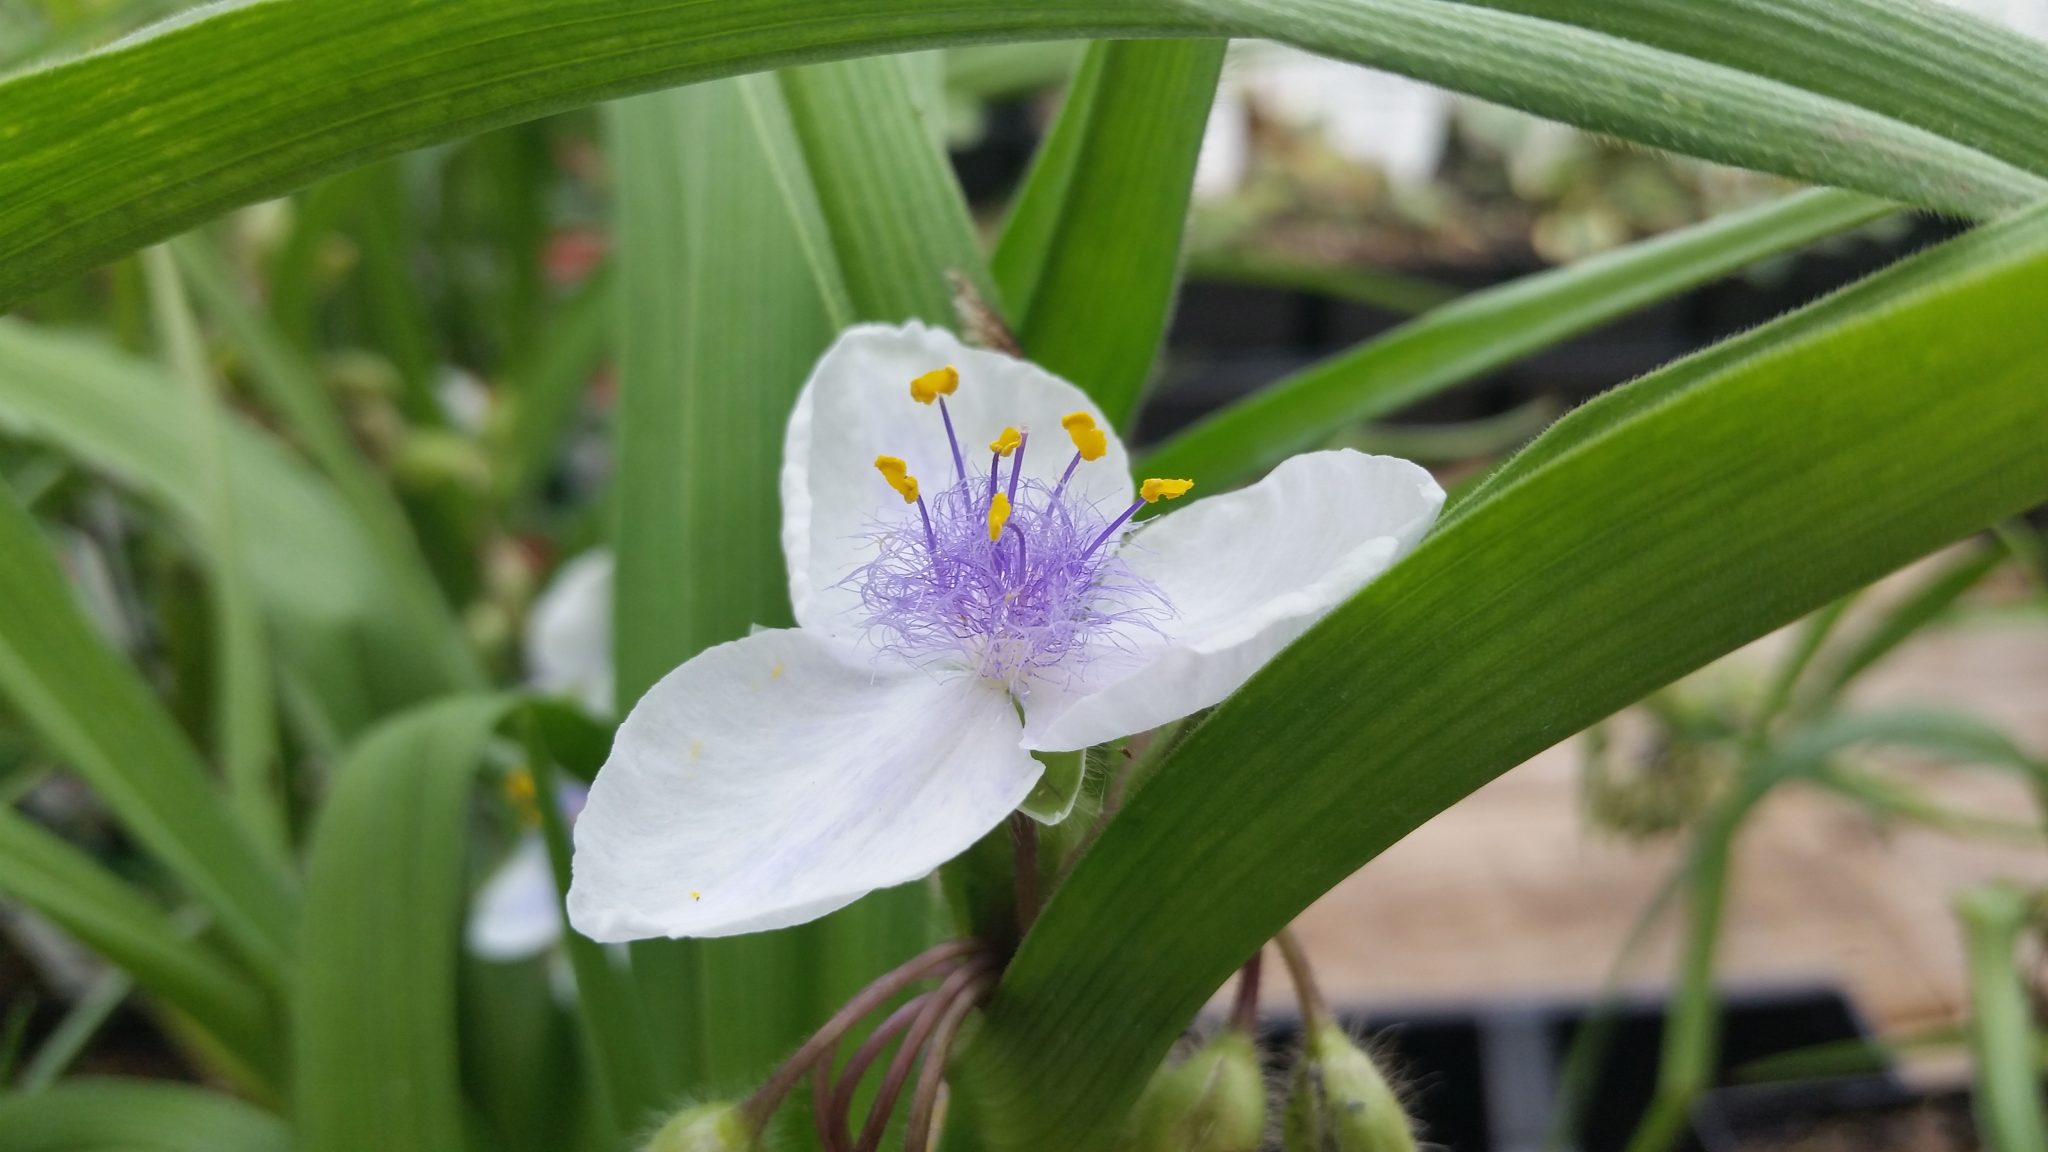 White flower with purple center